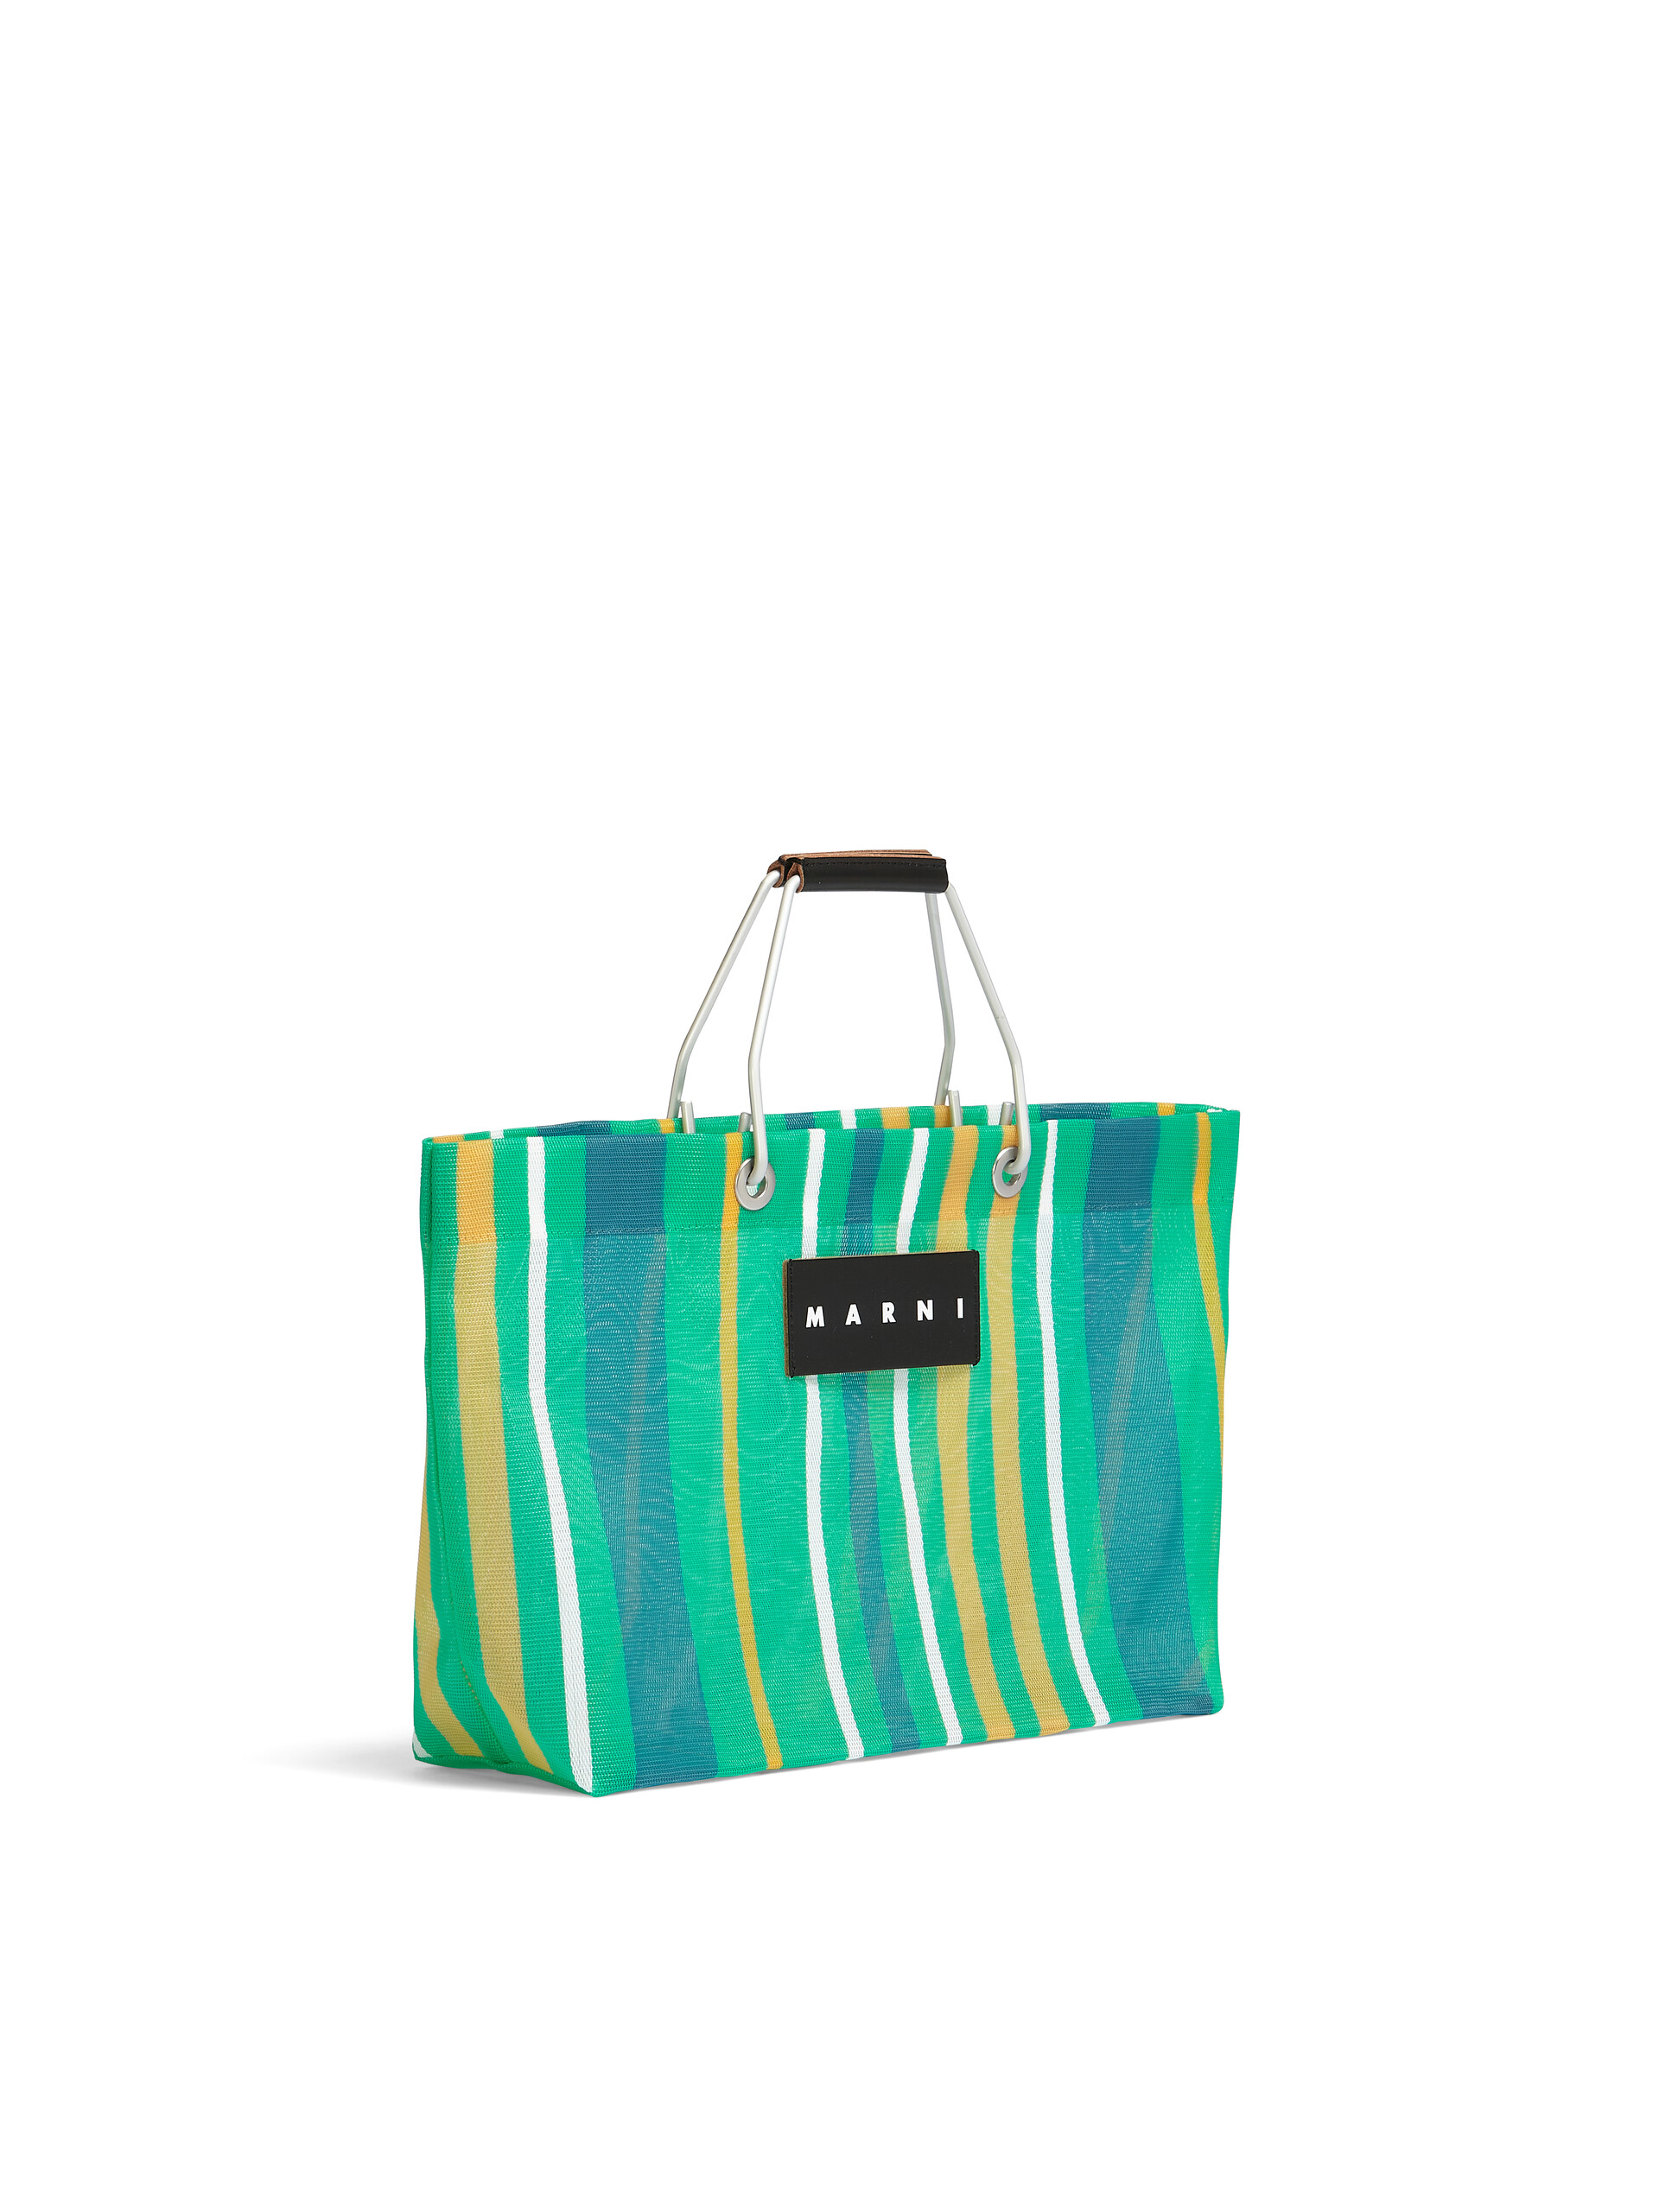 MARNI MARKET STRIPE multicolor green bag - Bags - Image 2